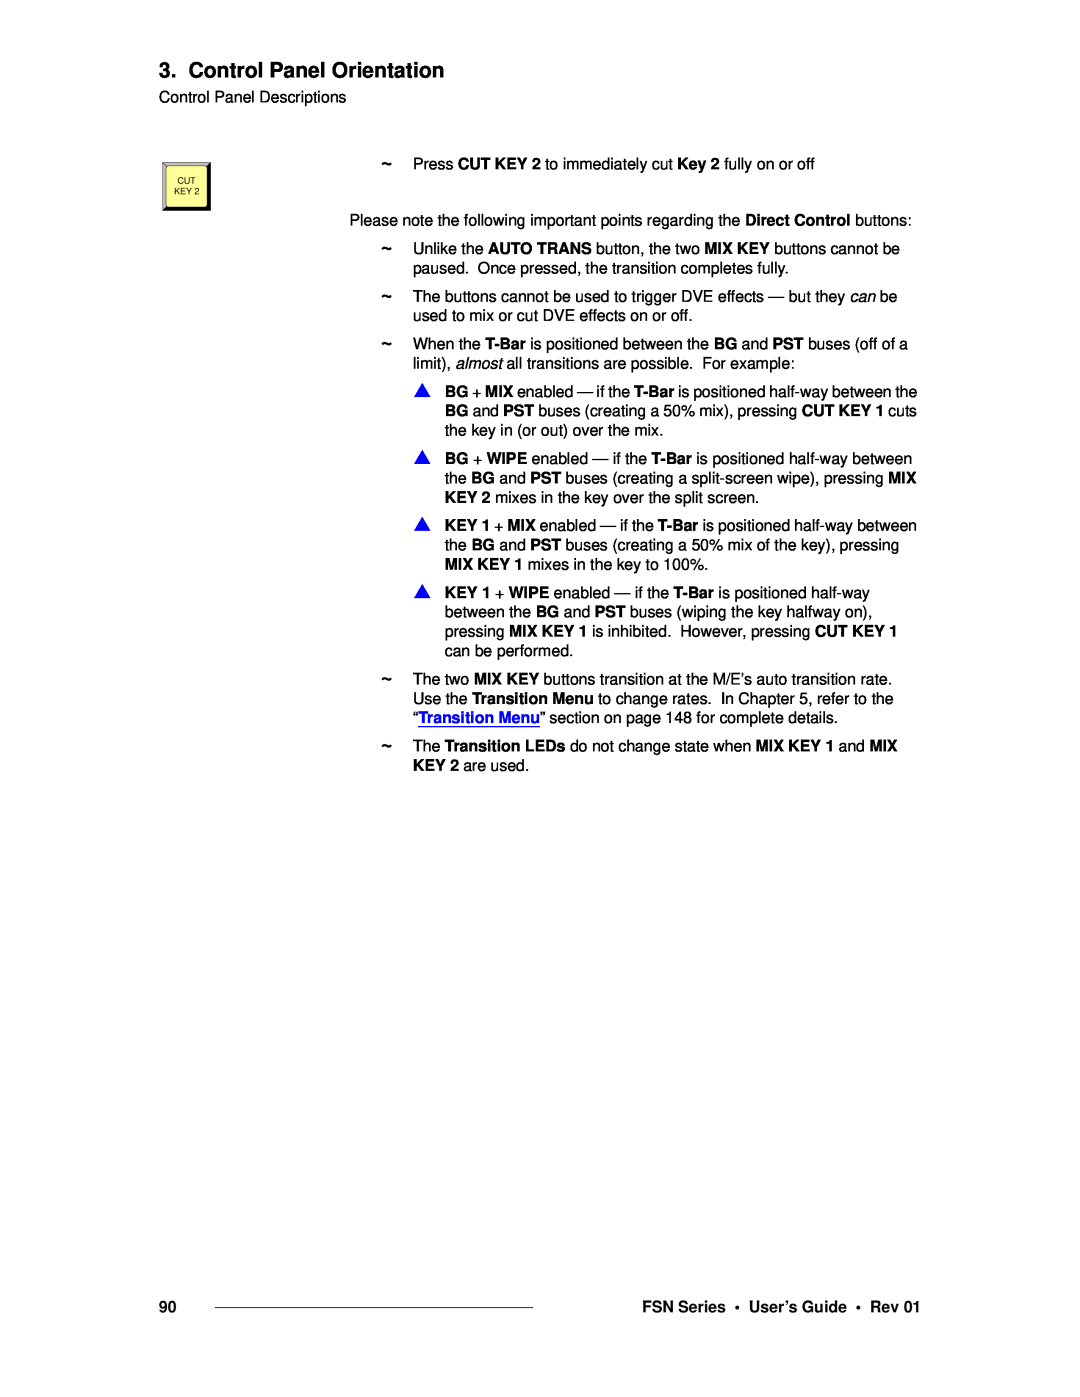 Barco 26-0702000-00 manual Control Panel Orientation, Control Panel Descriptions, FSN Series • User’s Guide • Rev 